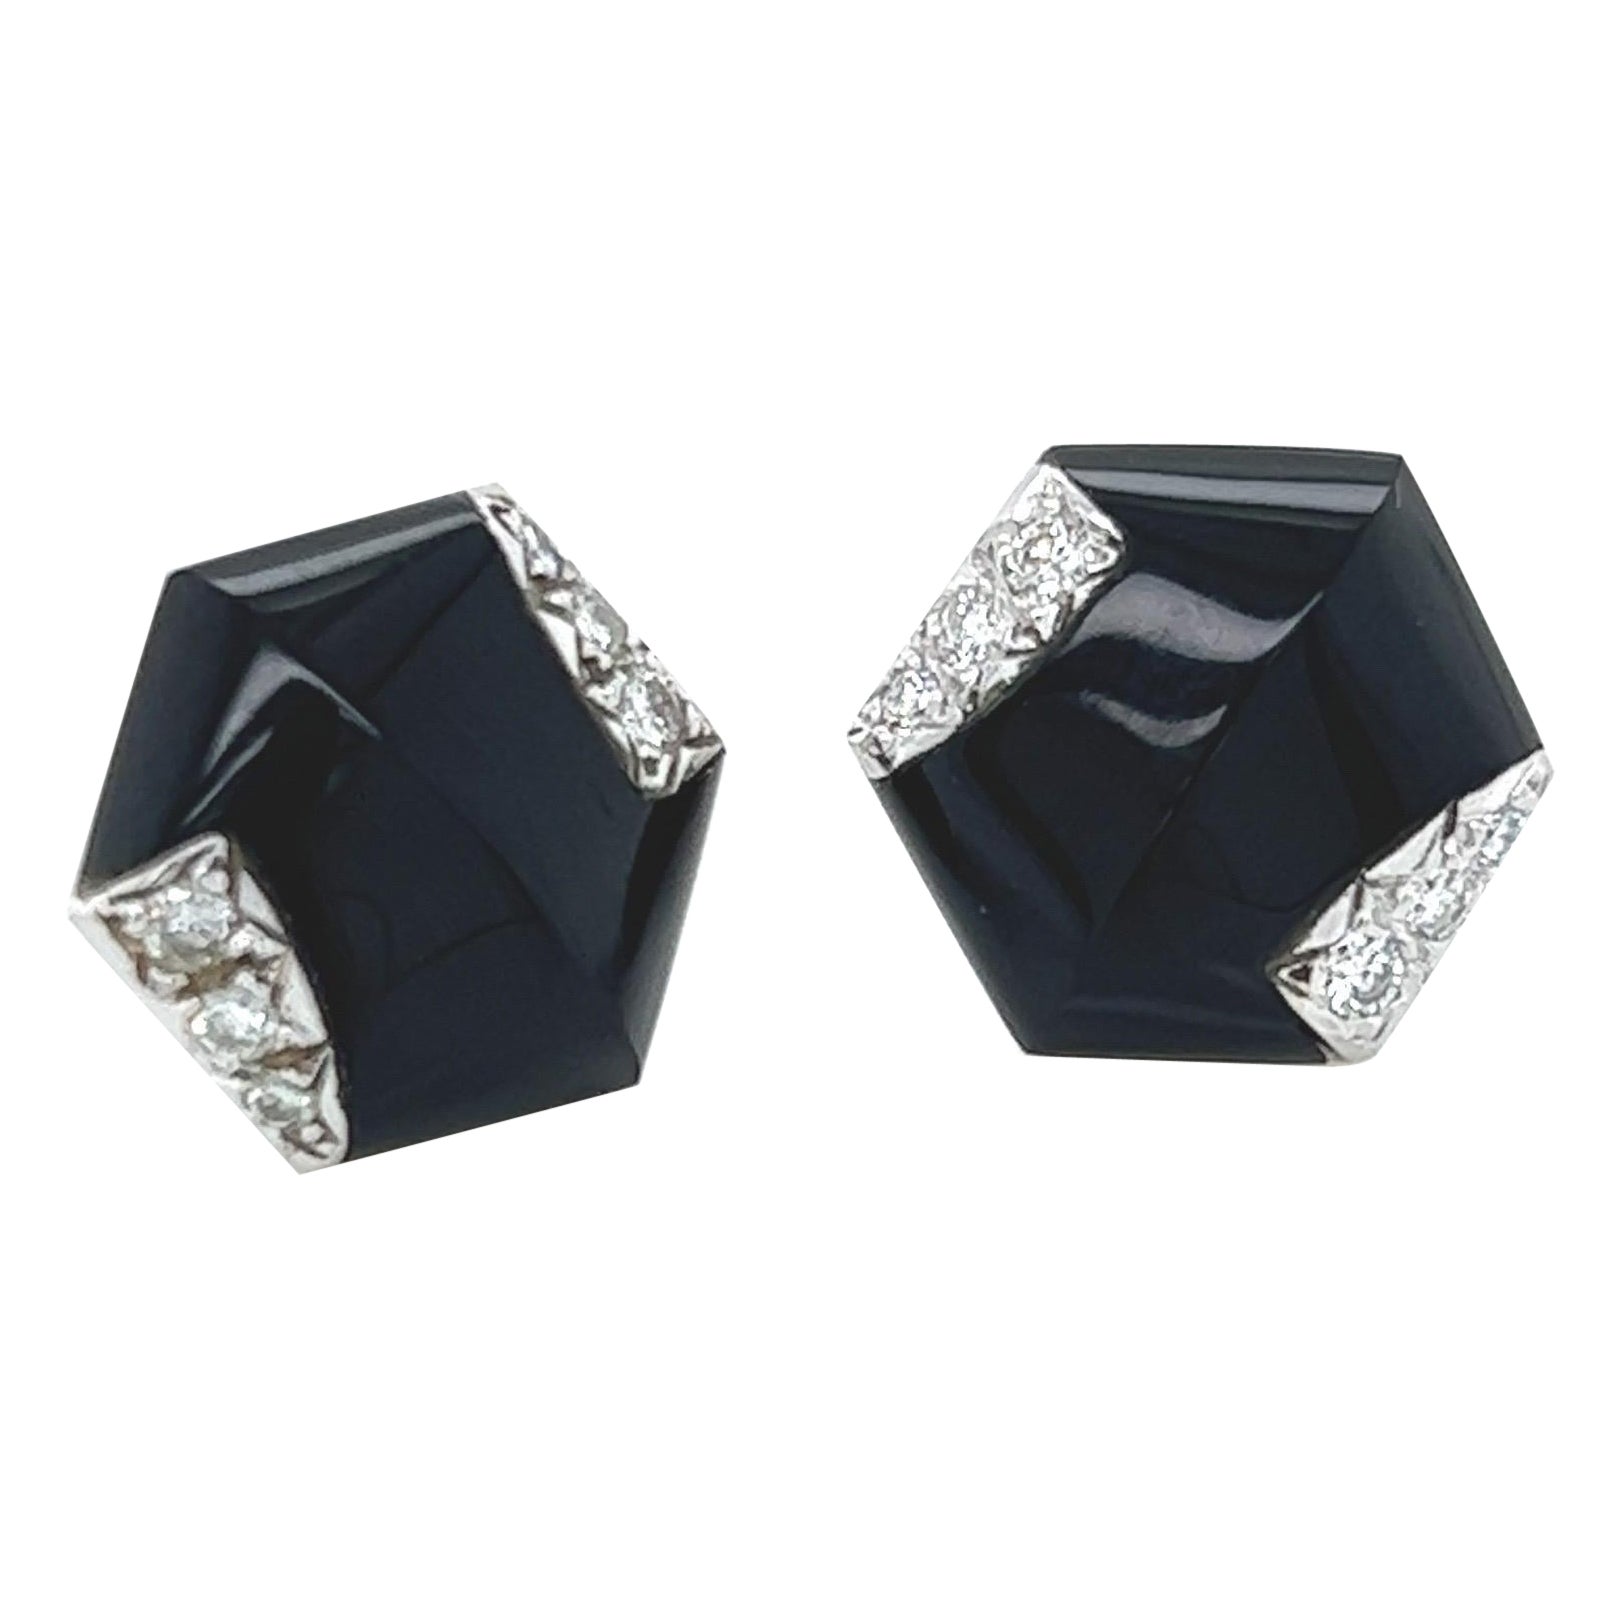 18k White Gold Hexagon Stud Earrings with Handcut Black Onyx and Diamonds